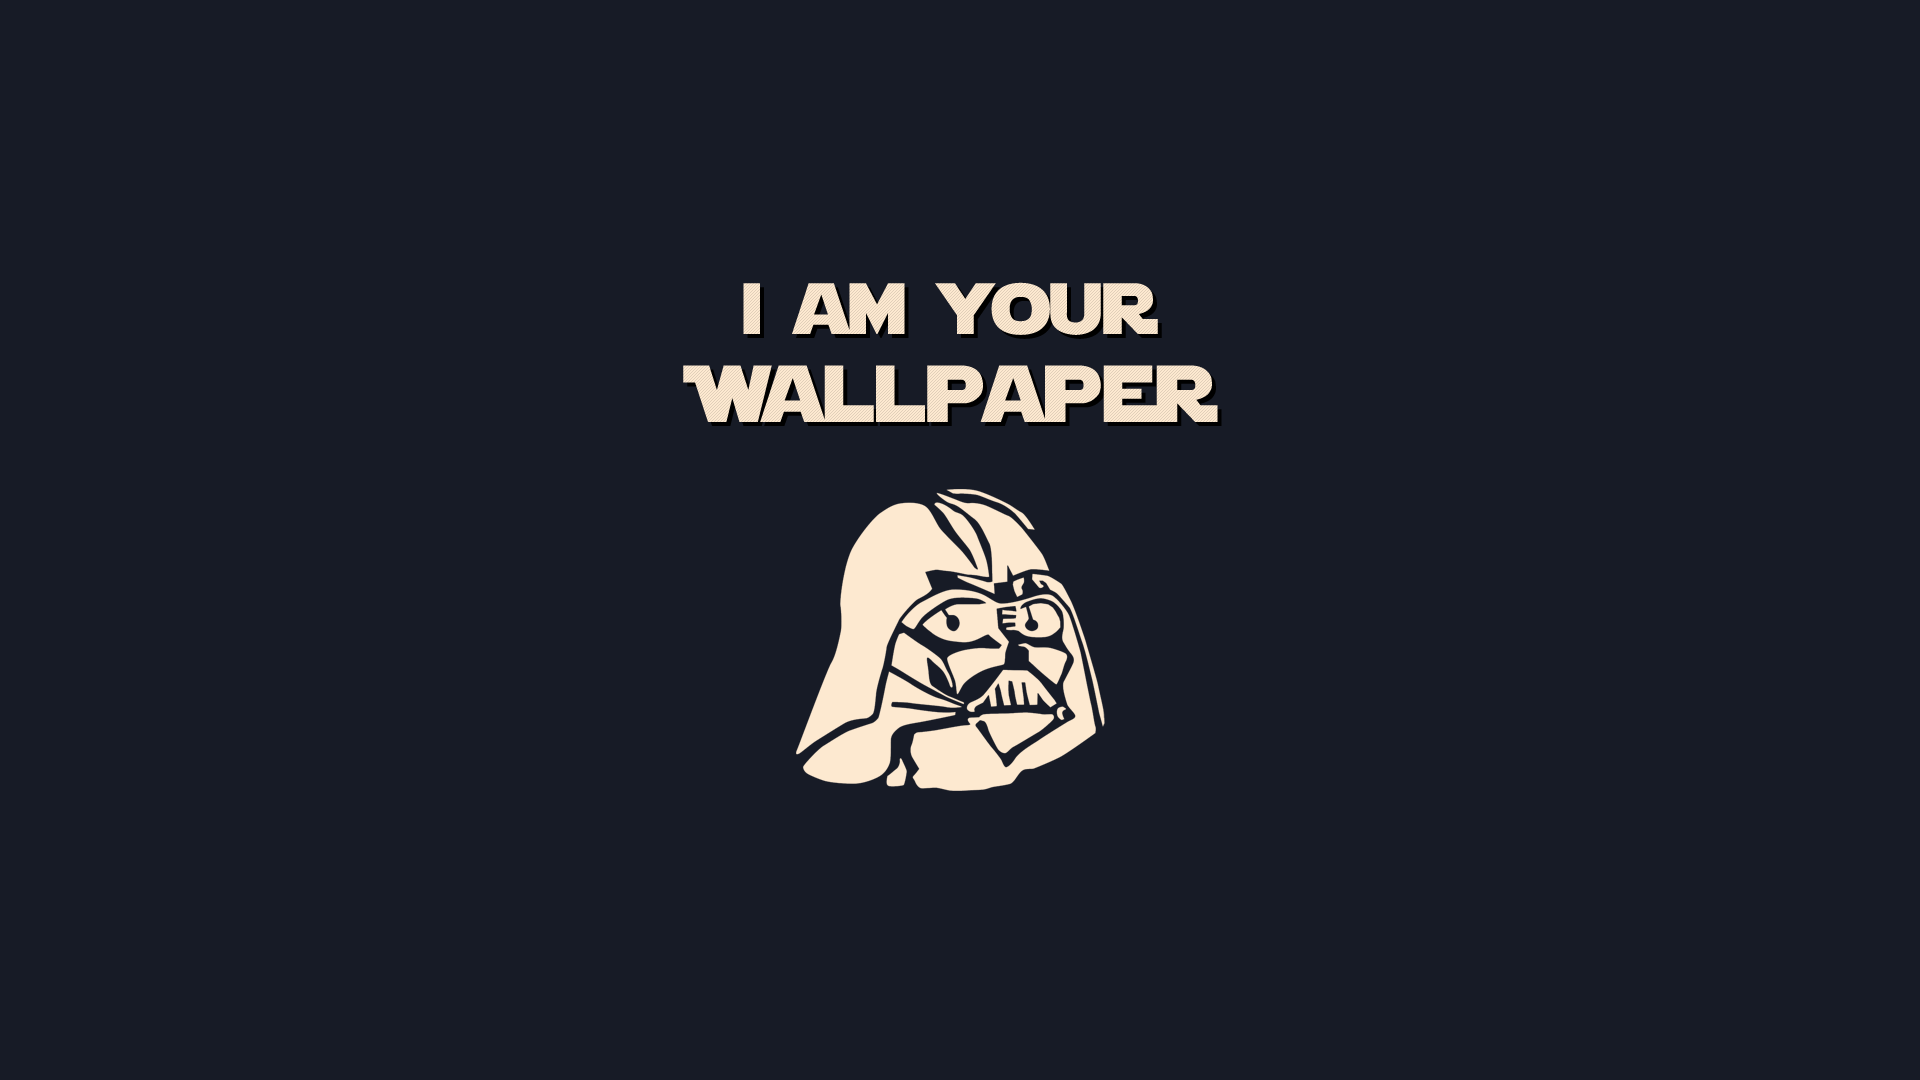 Am Your Wallpaper